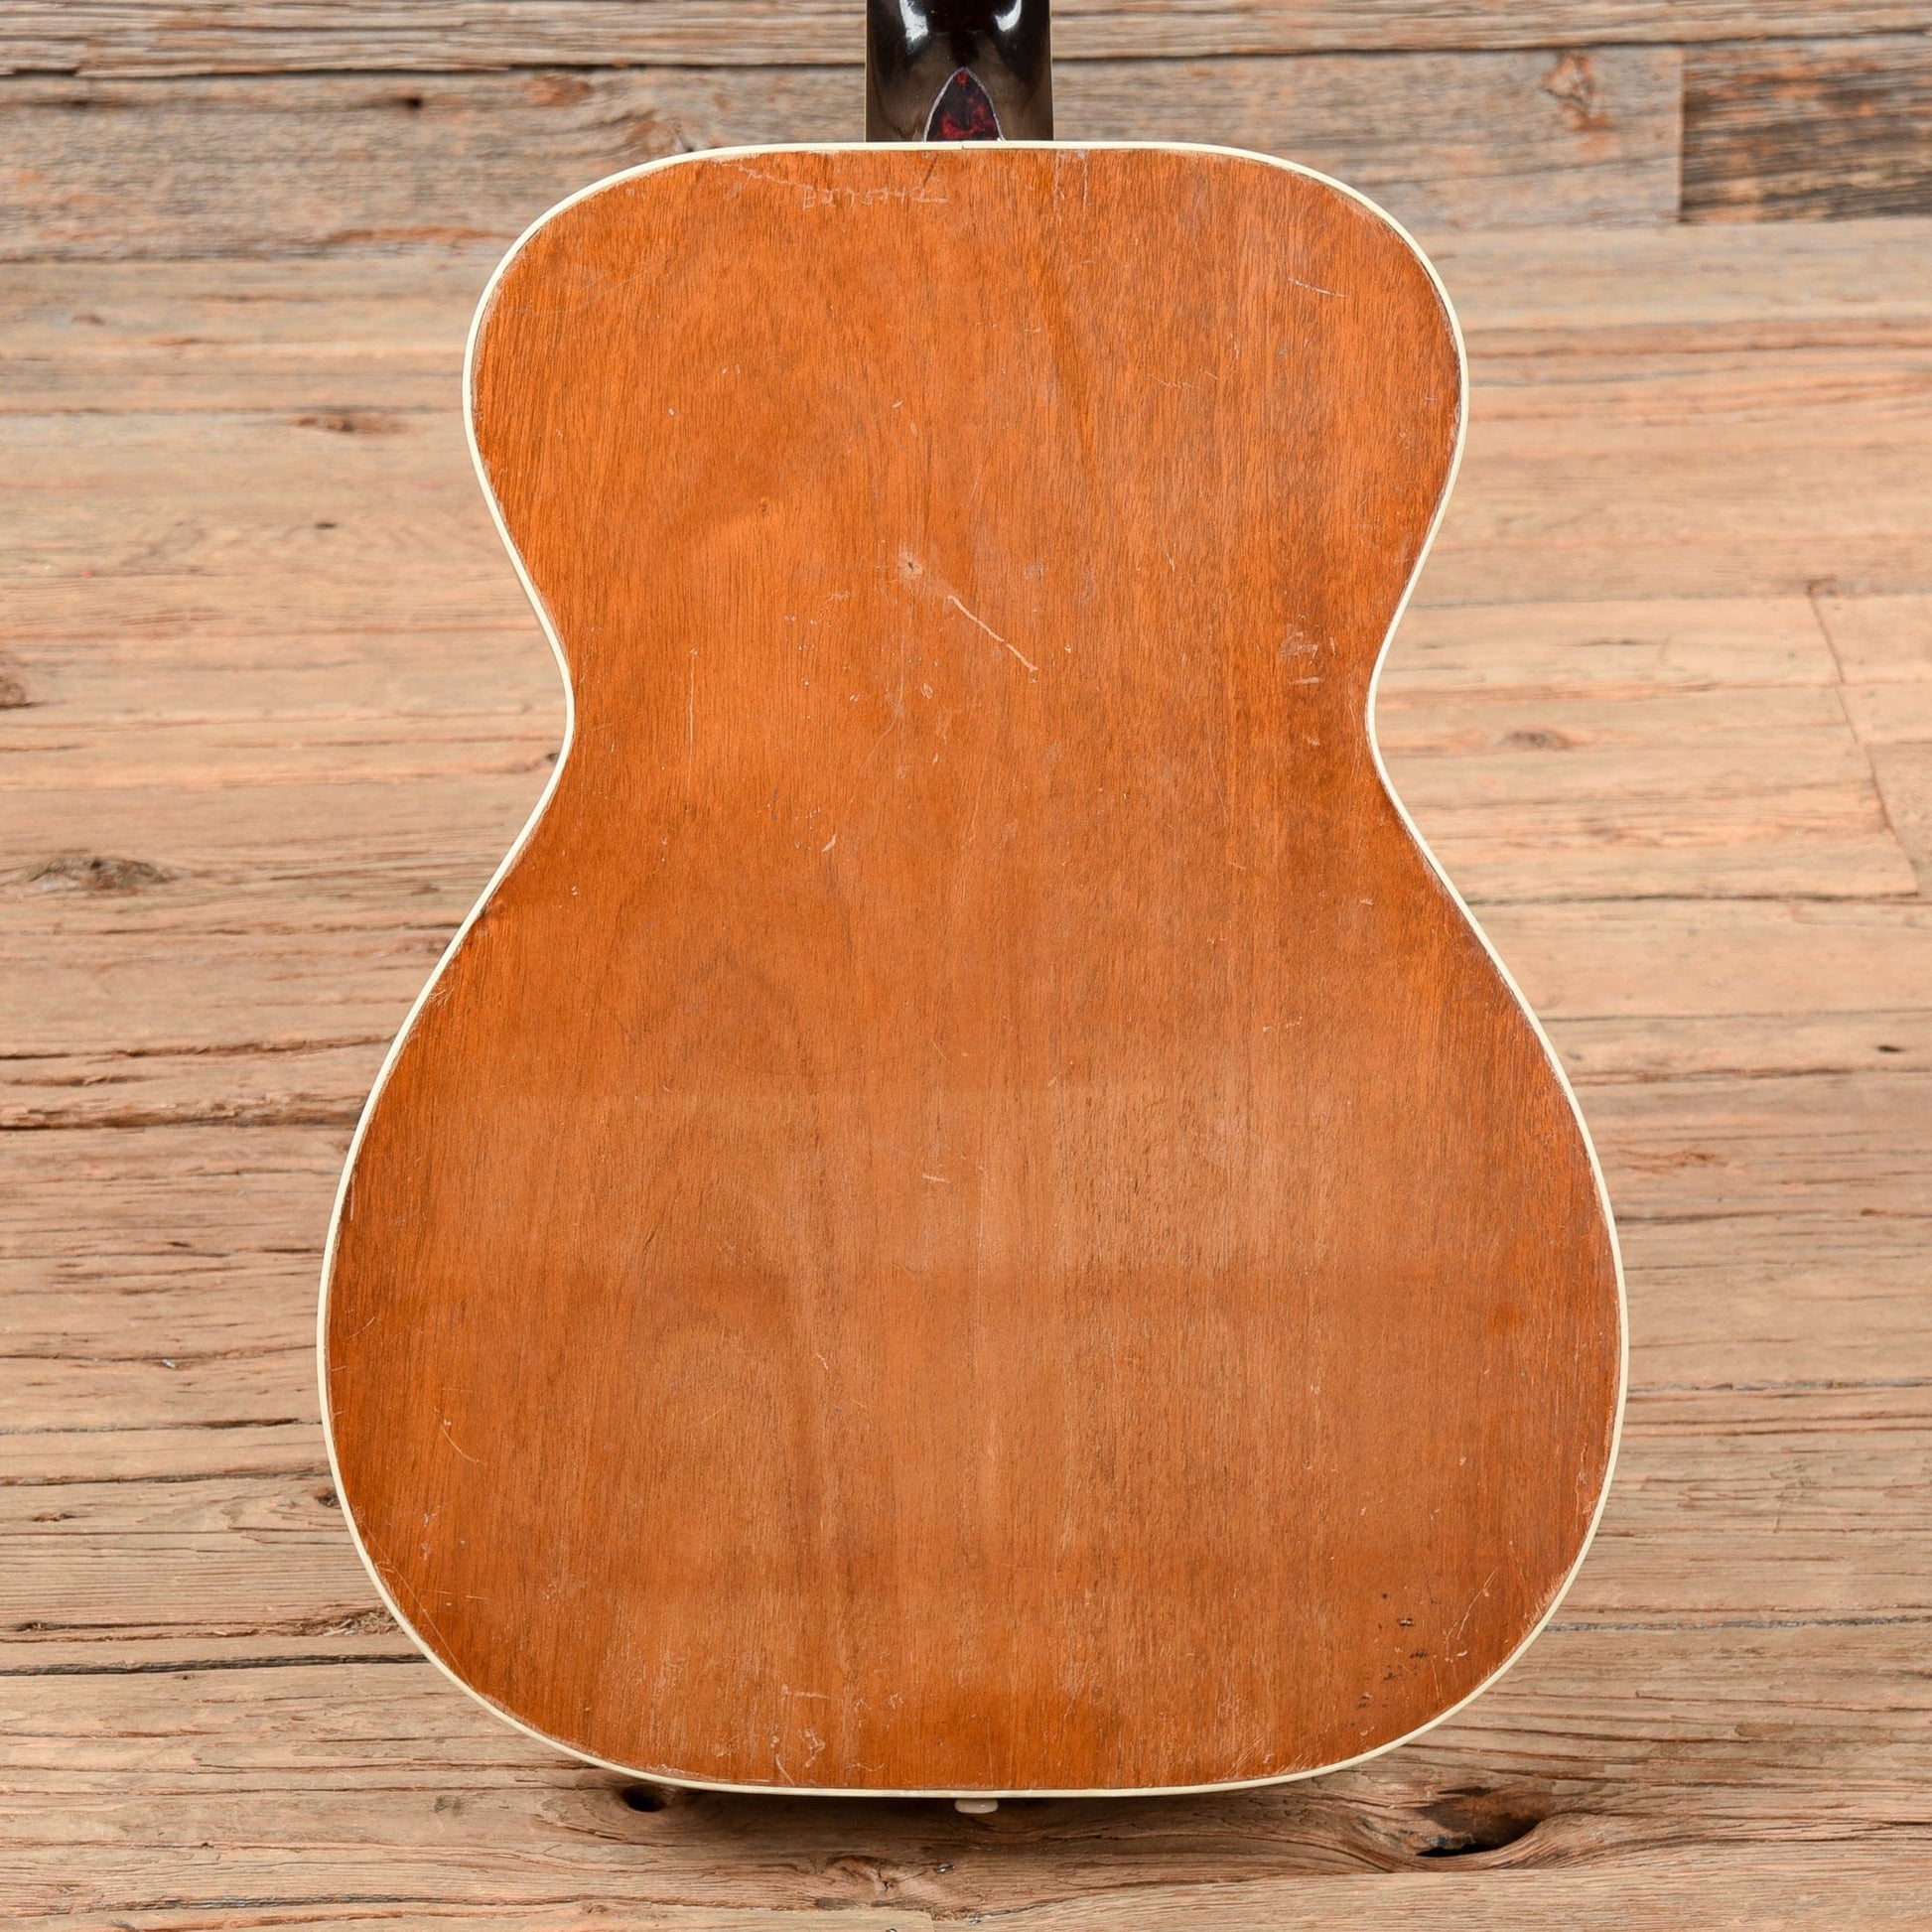 Regal H1203 Natural 1960s Acoustic Guitars / Concert